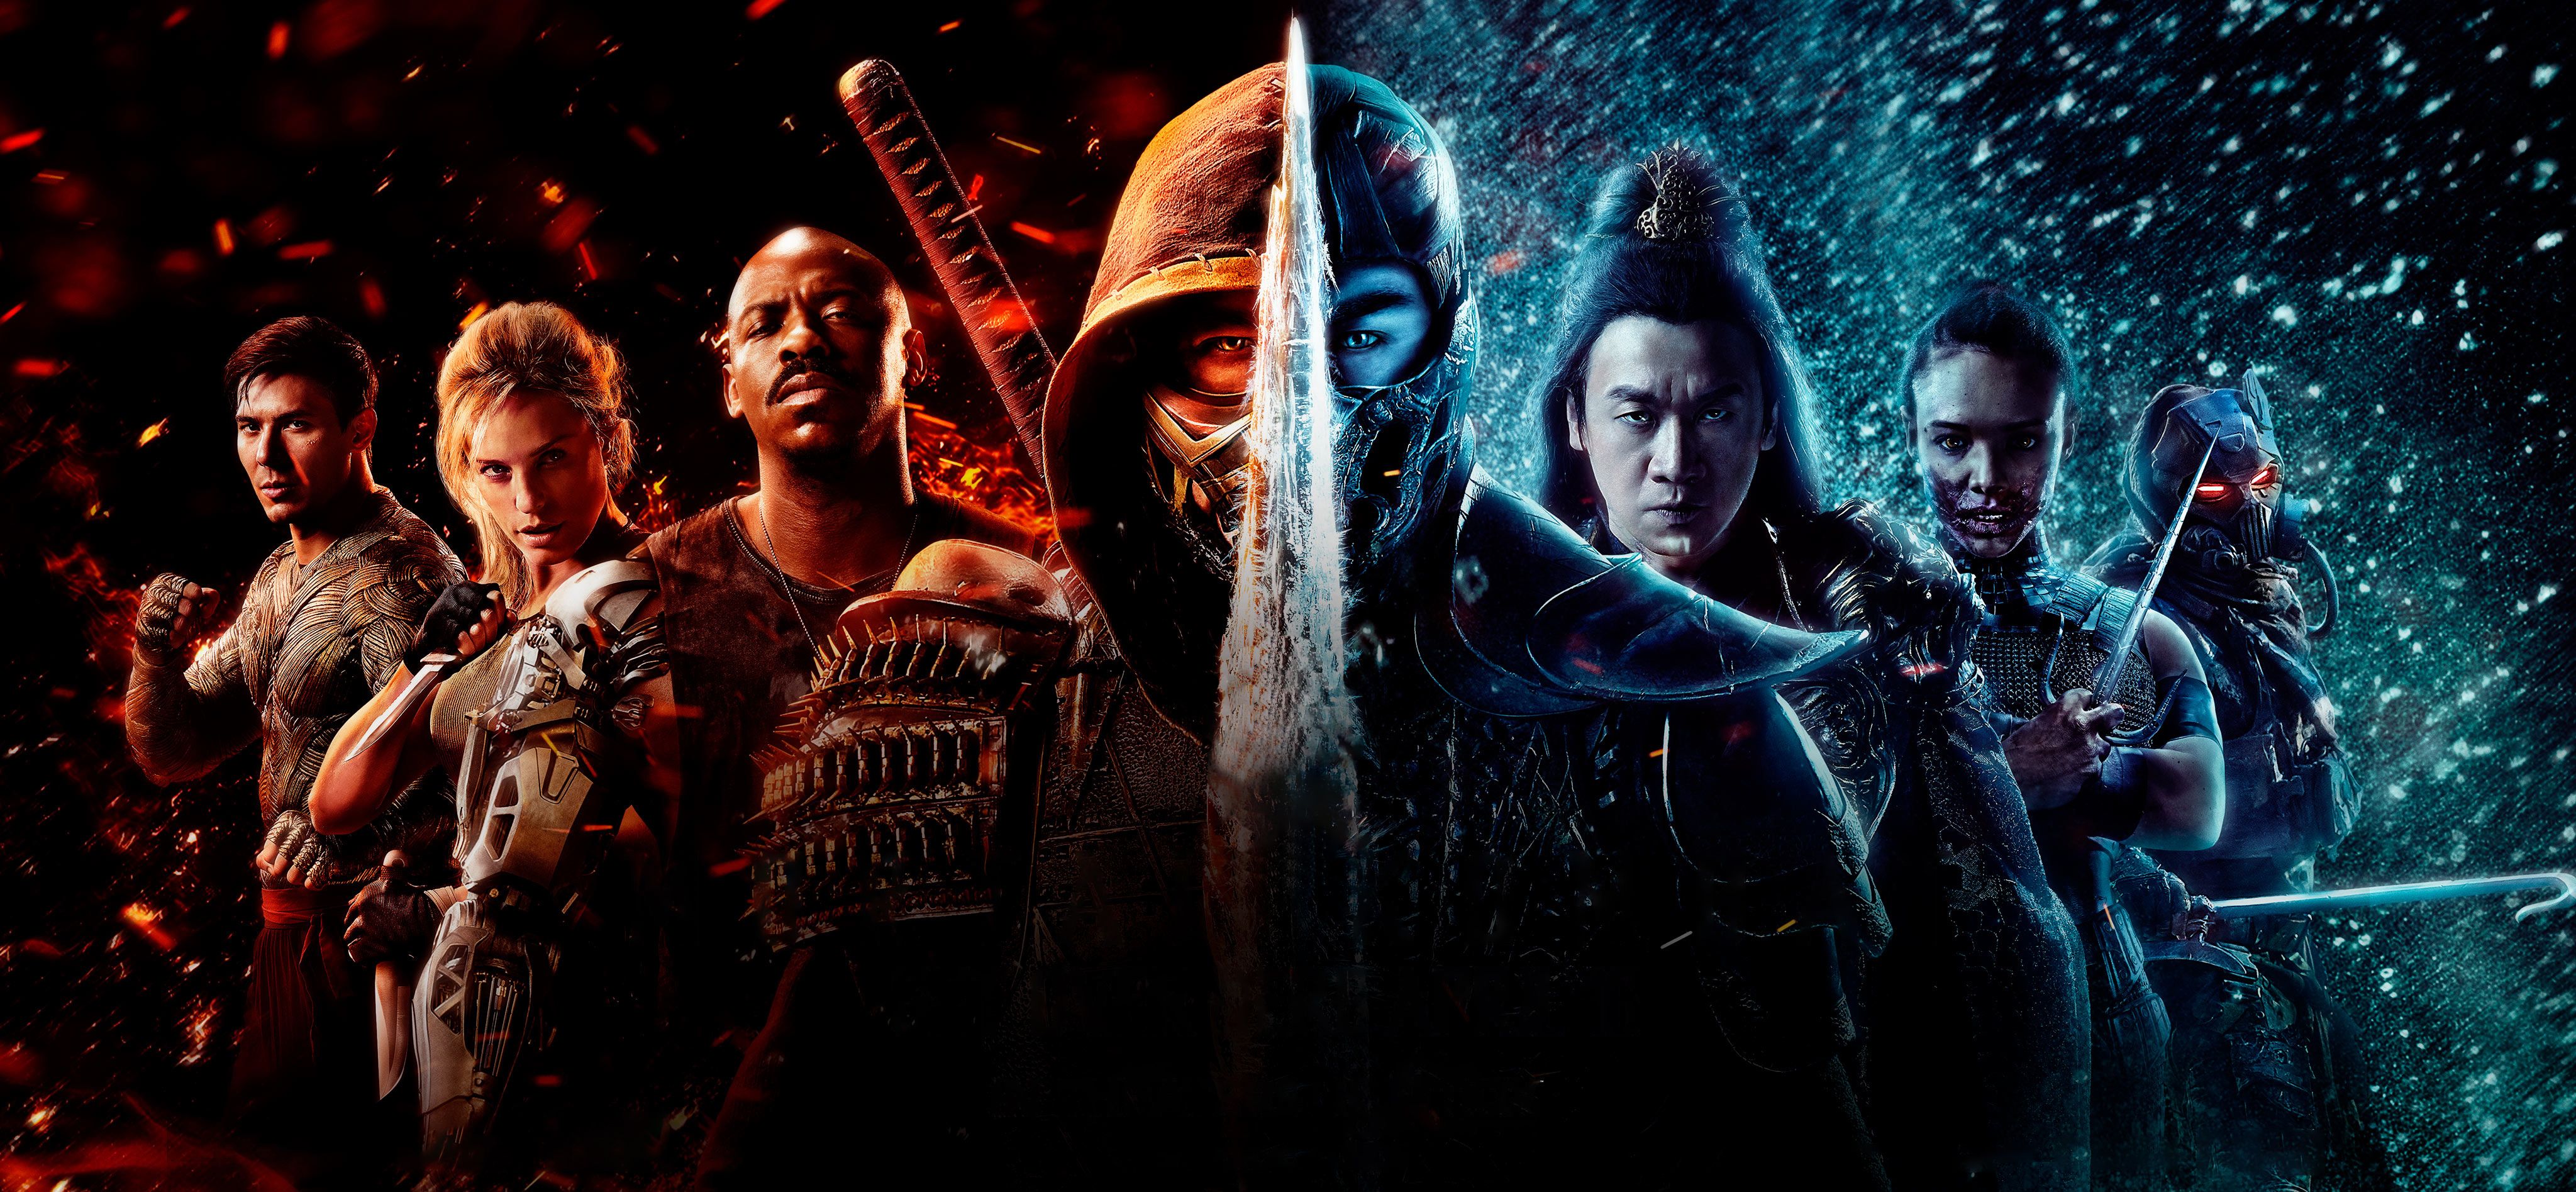 Mortal Kombat Wallpaper 4K, 2021 Movies, Poster, Movies